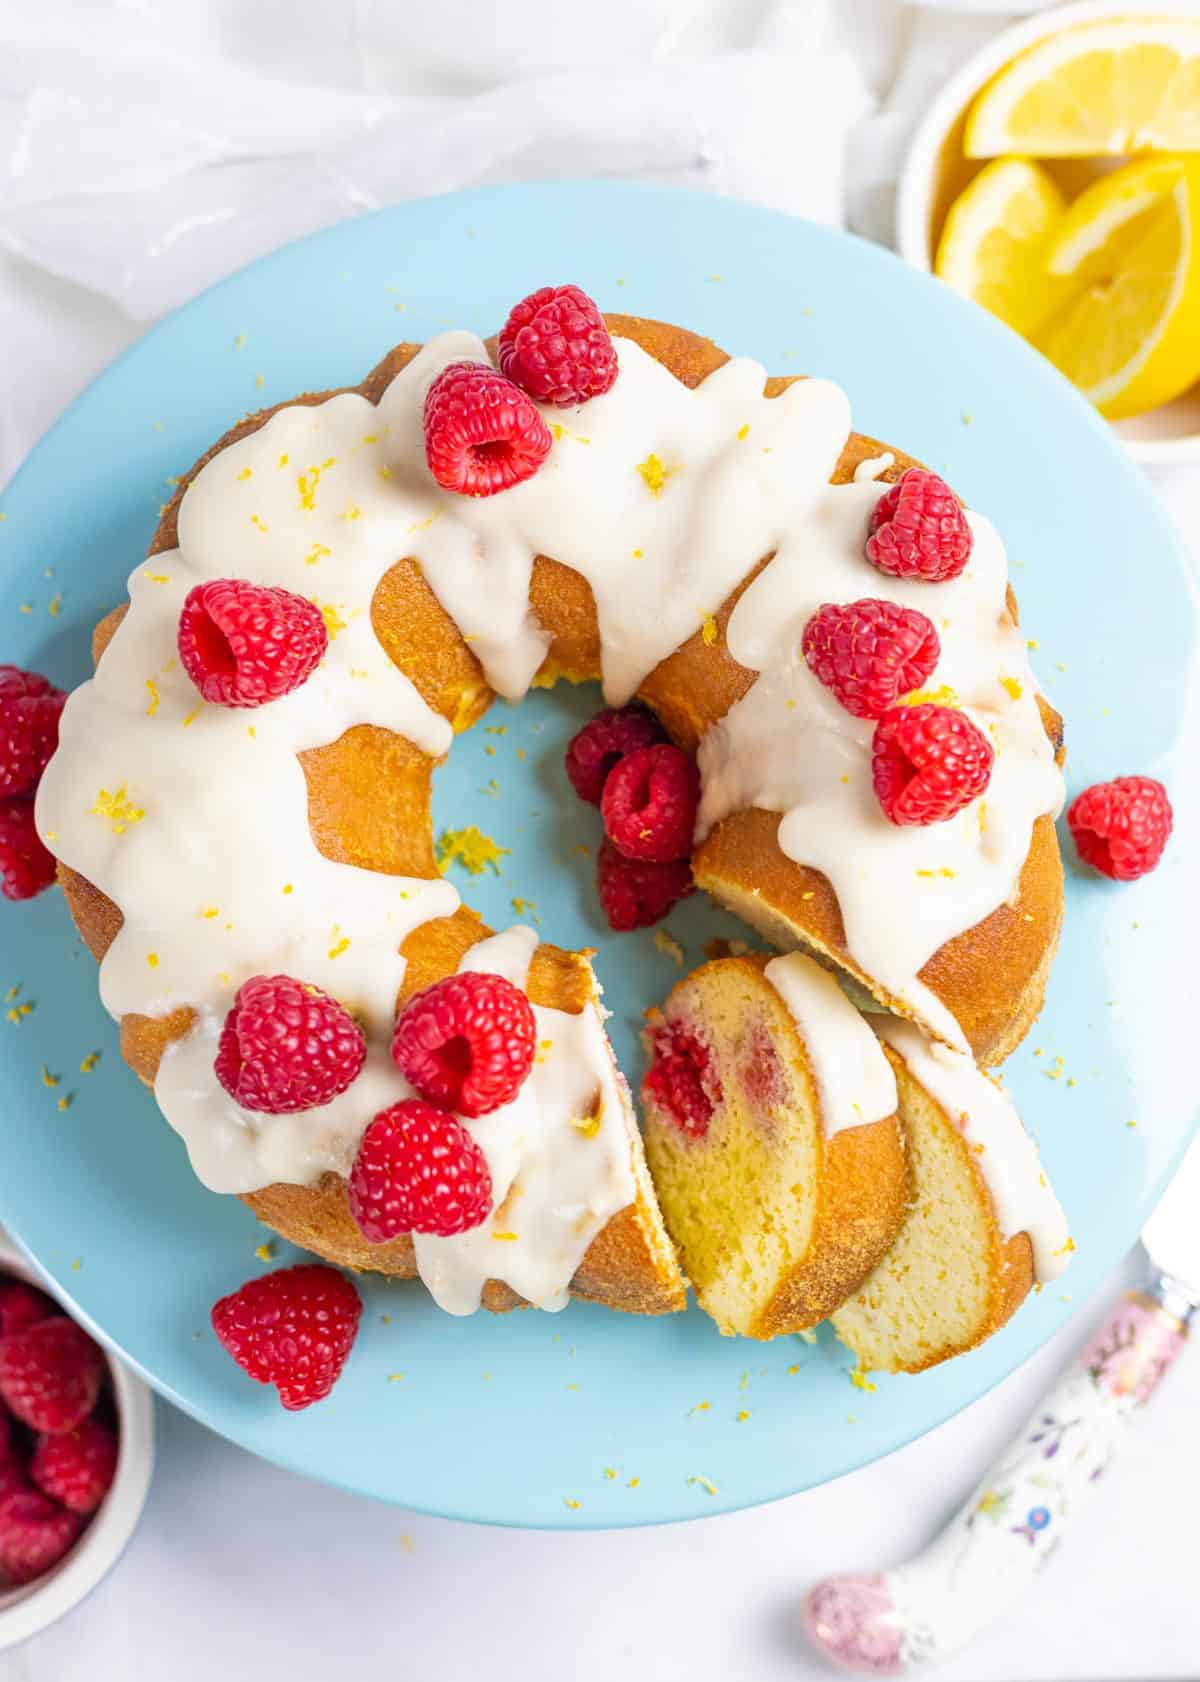 Lemon raspberry bundt cake on a blue cake pedestal topped with lemon glaze and whole raspberries.